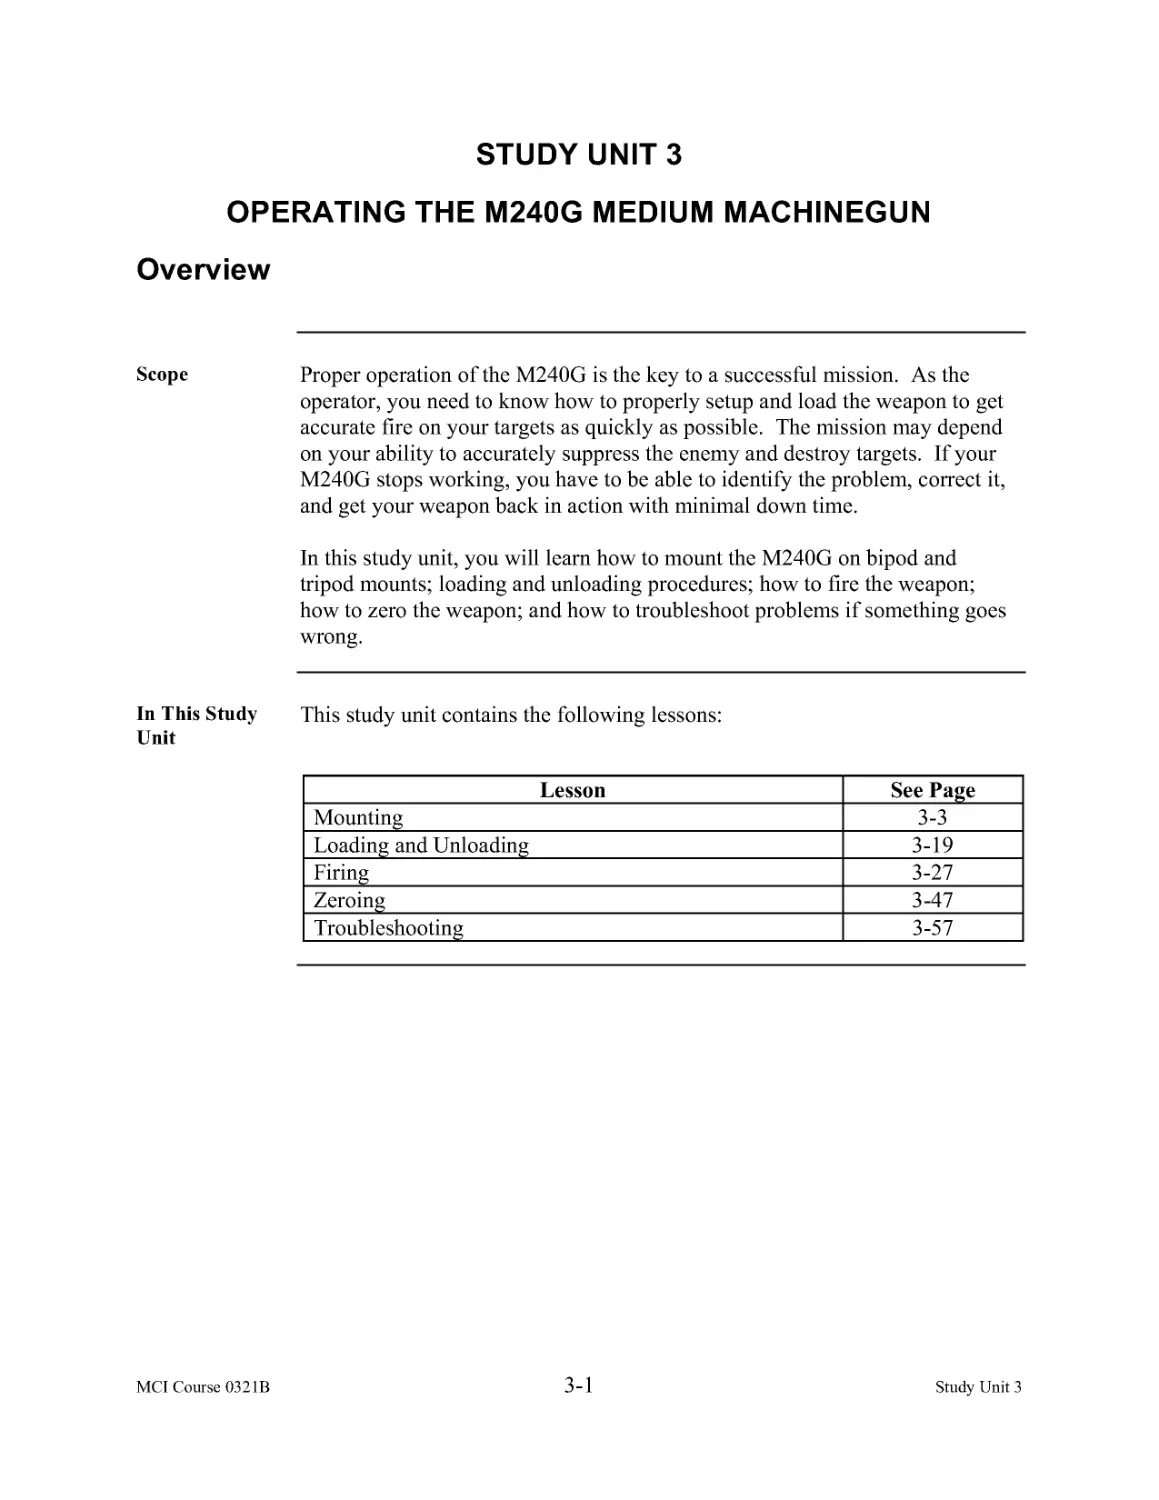 Study Unit 3:  Operating the M240G Medium Machinegun